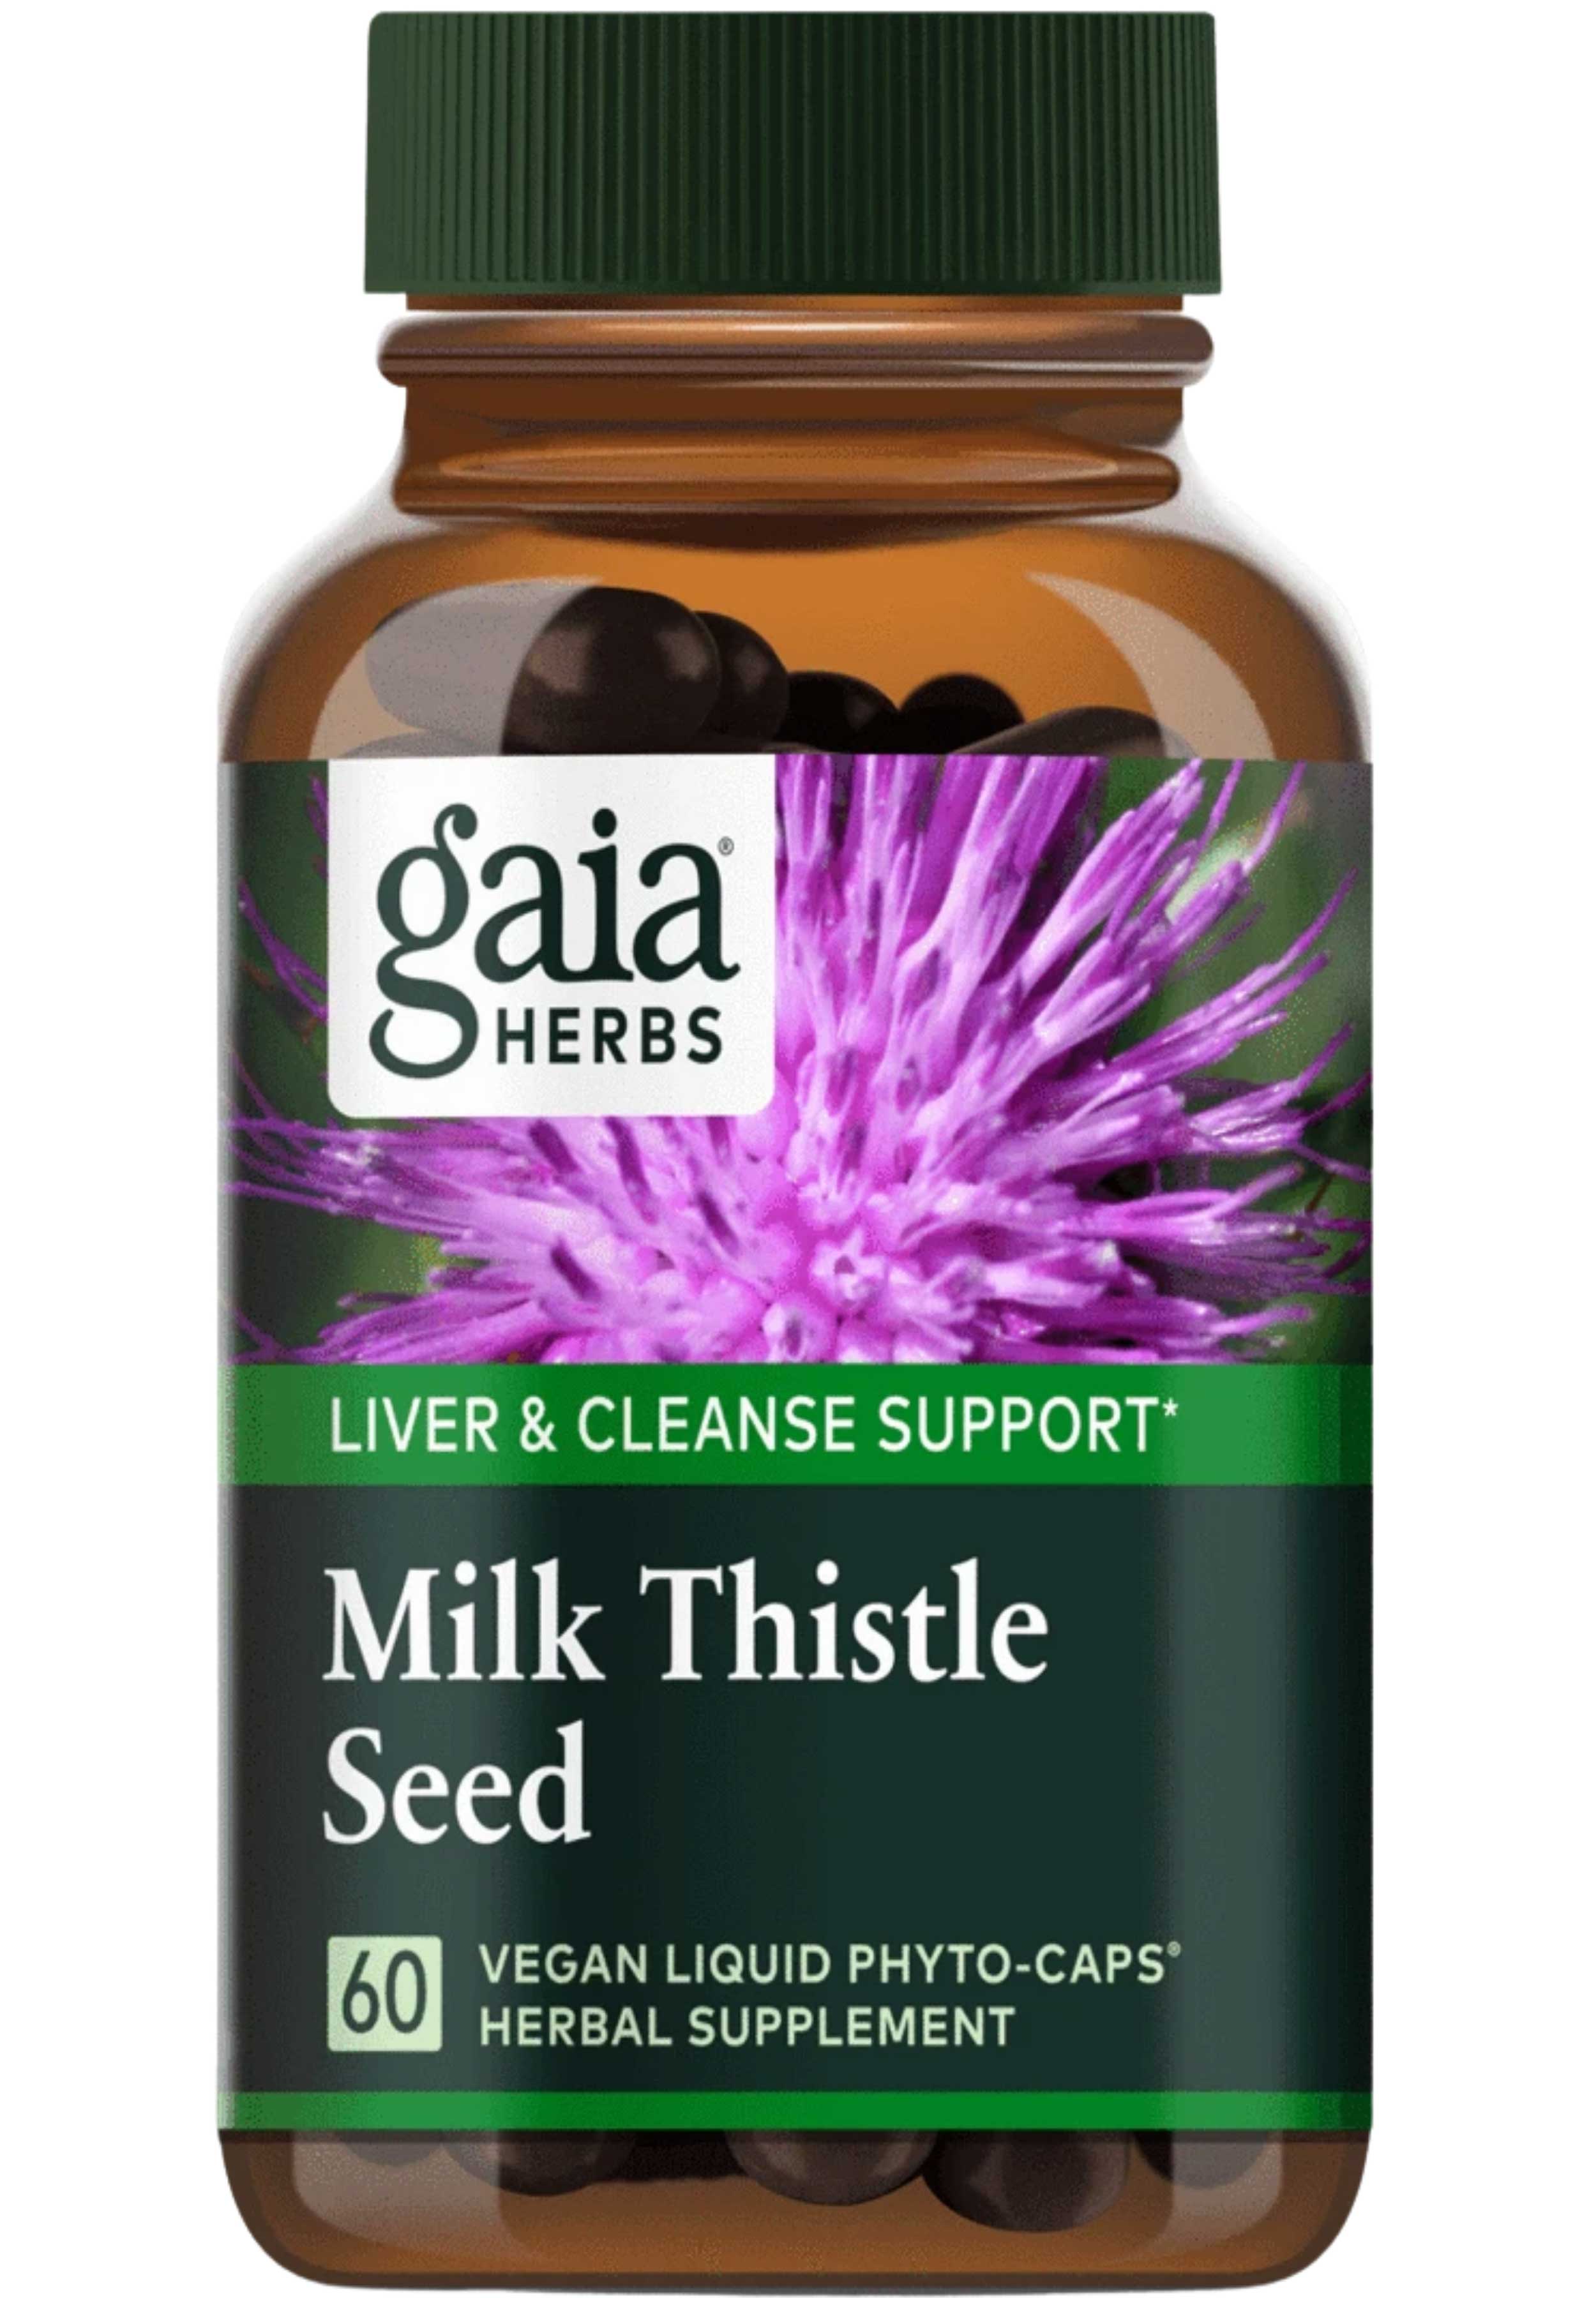 Gaia Herbs Milk Thistle Seed Capsules